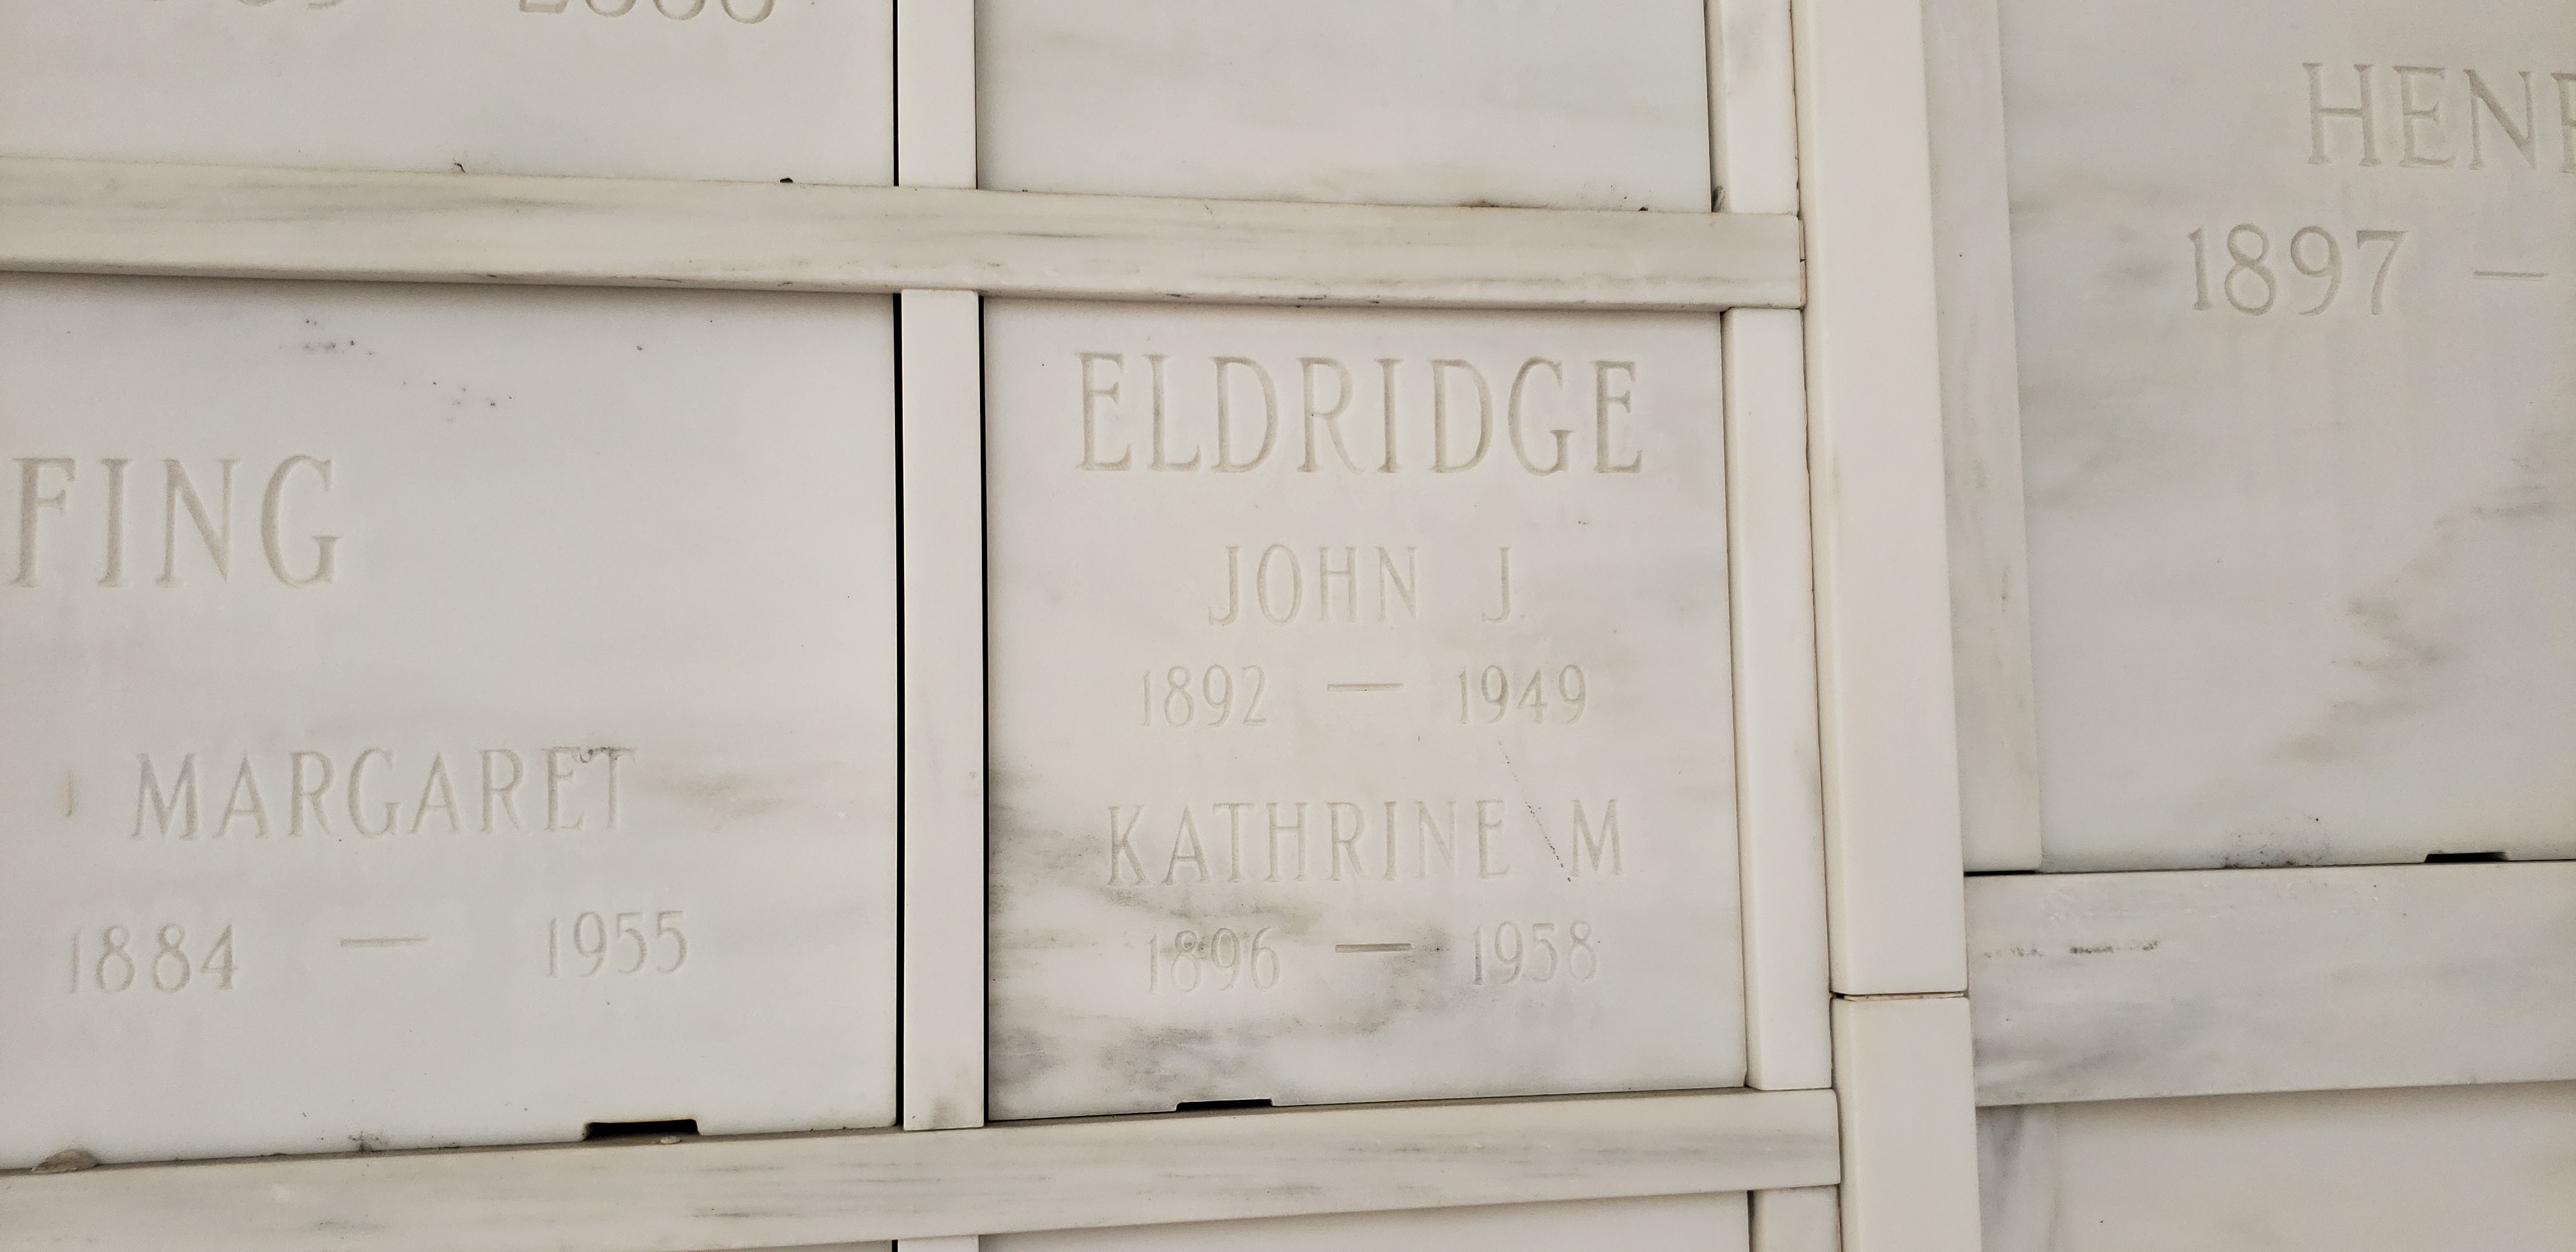 John J Eldridge